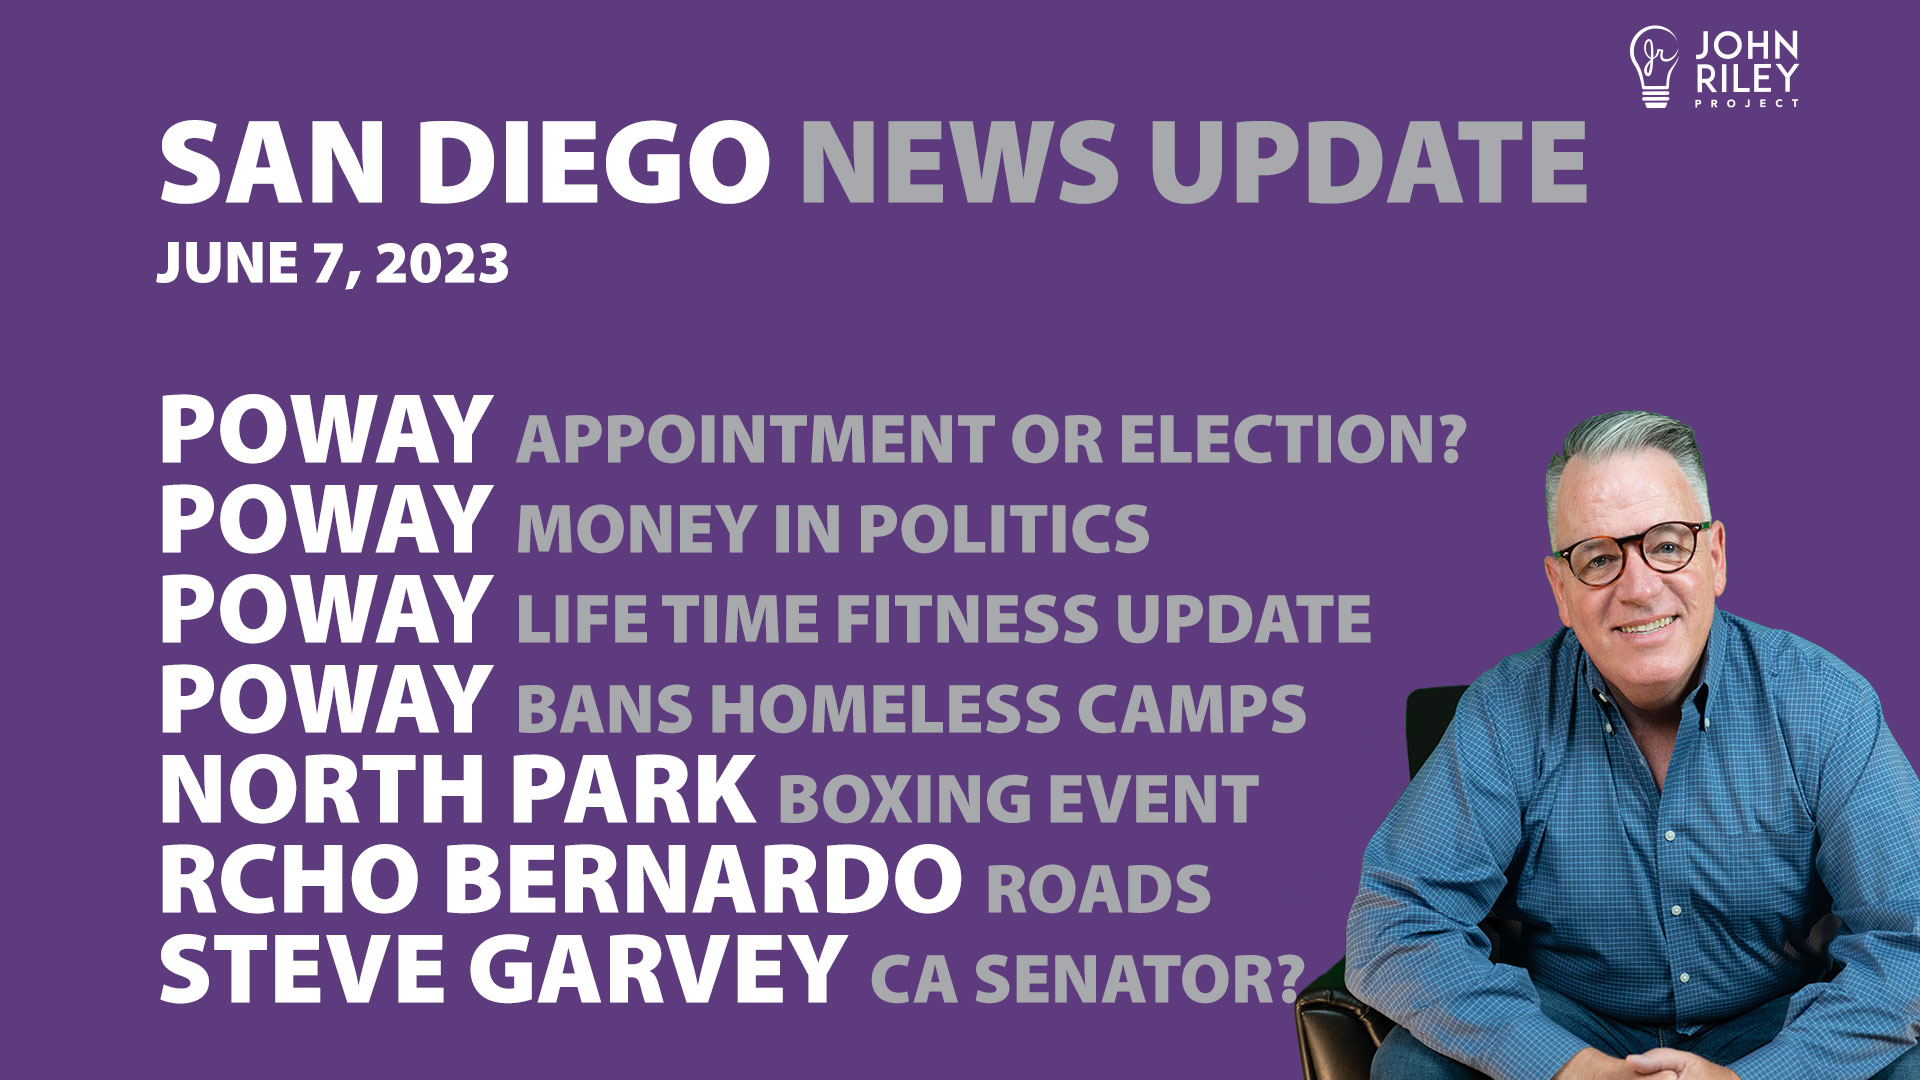 John Riley discusses San Diego News, Poway Politics, Homelessness, Archie Moore, Steve Garvey